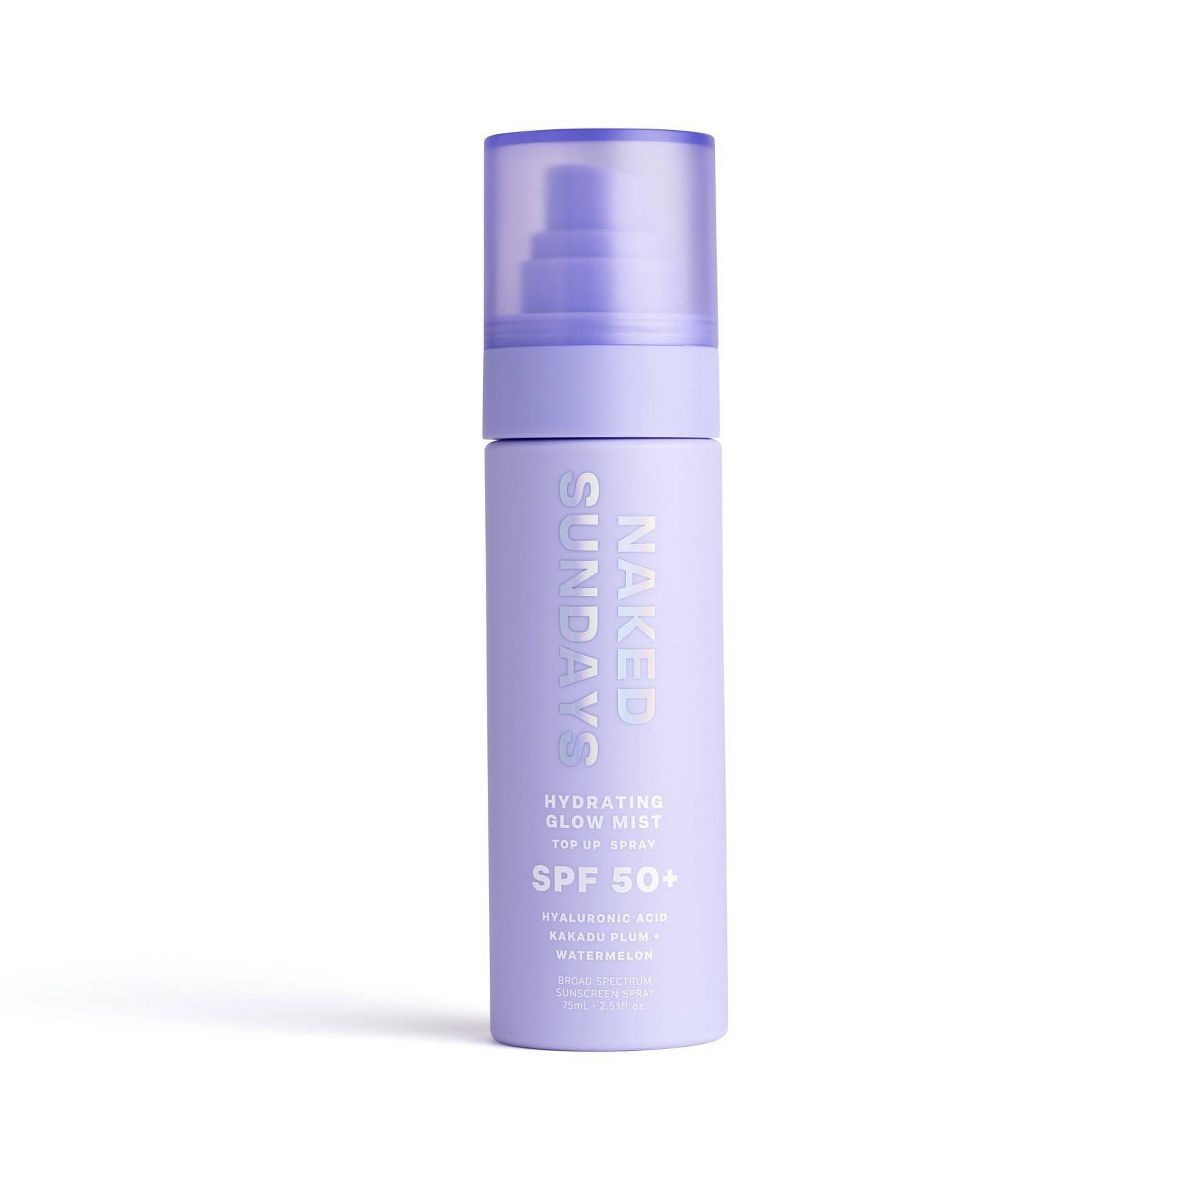 Naked Sundays Hydrating Glow Face Mist Top Up Spray - SPF50+ - 75ml | Target